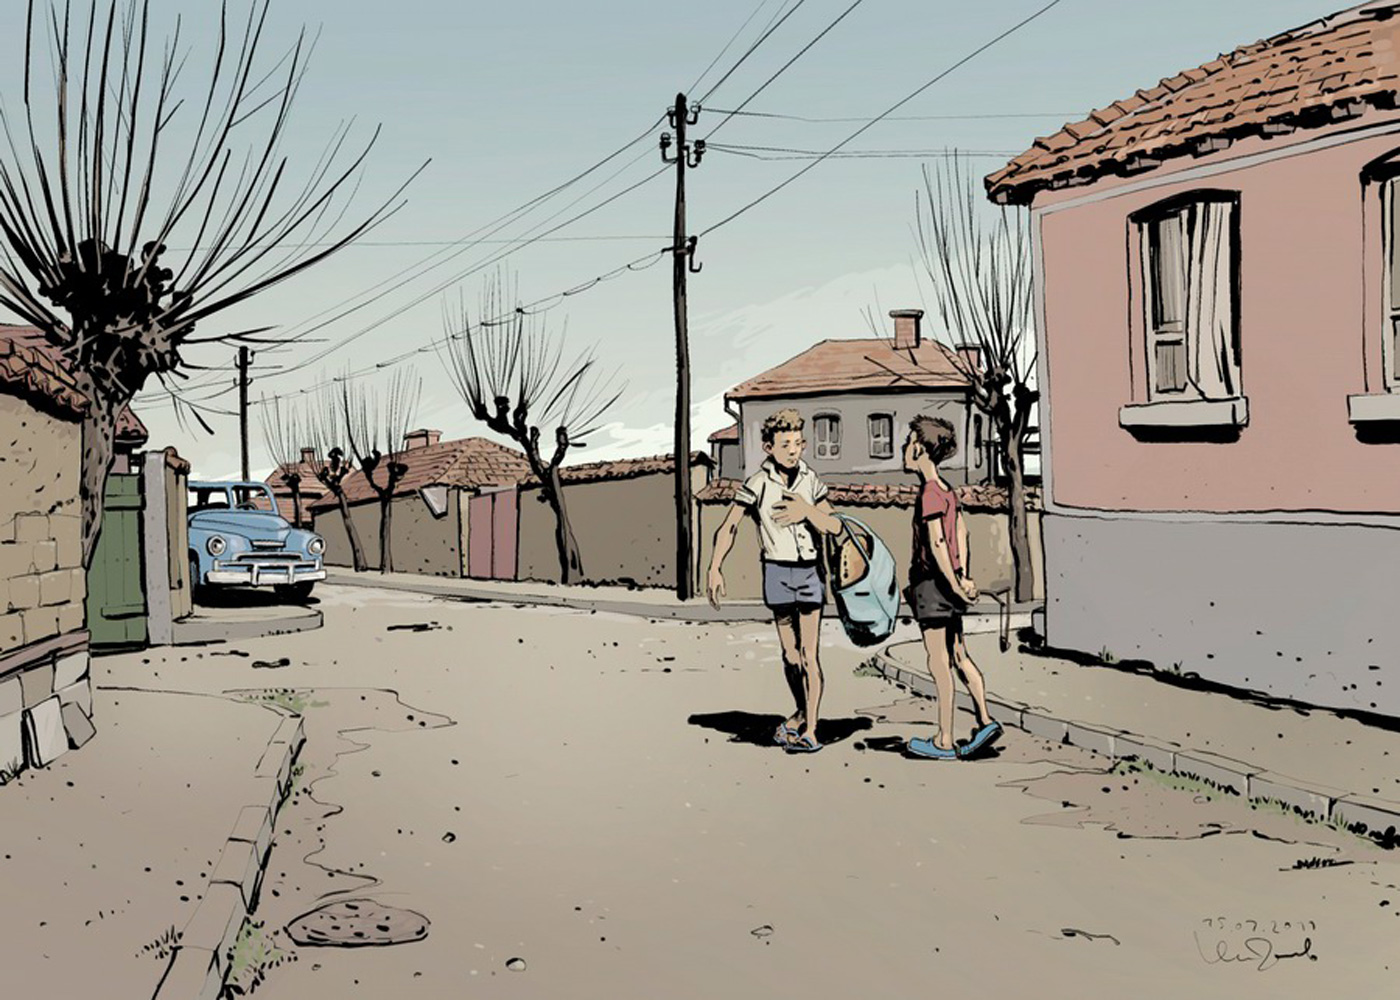 Comic Art Of Two Boys Talking On The Village Street